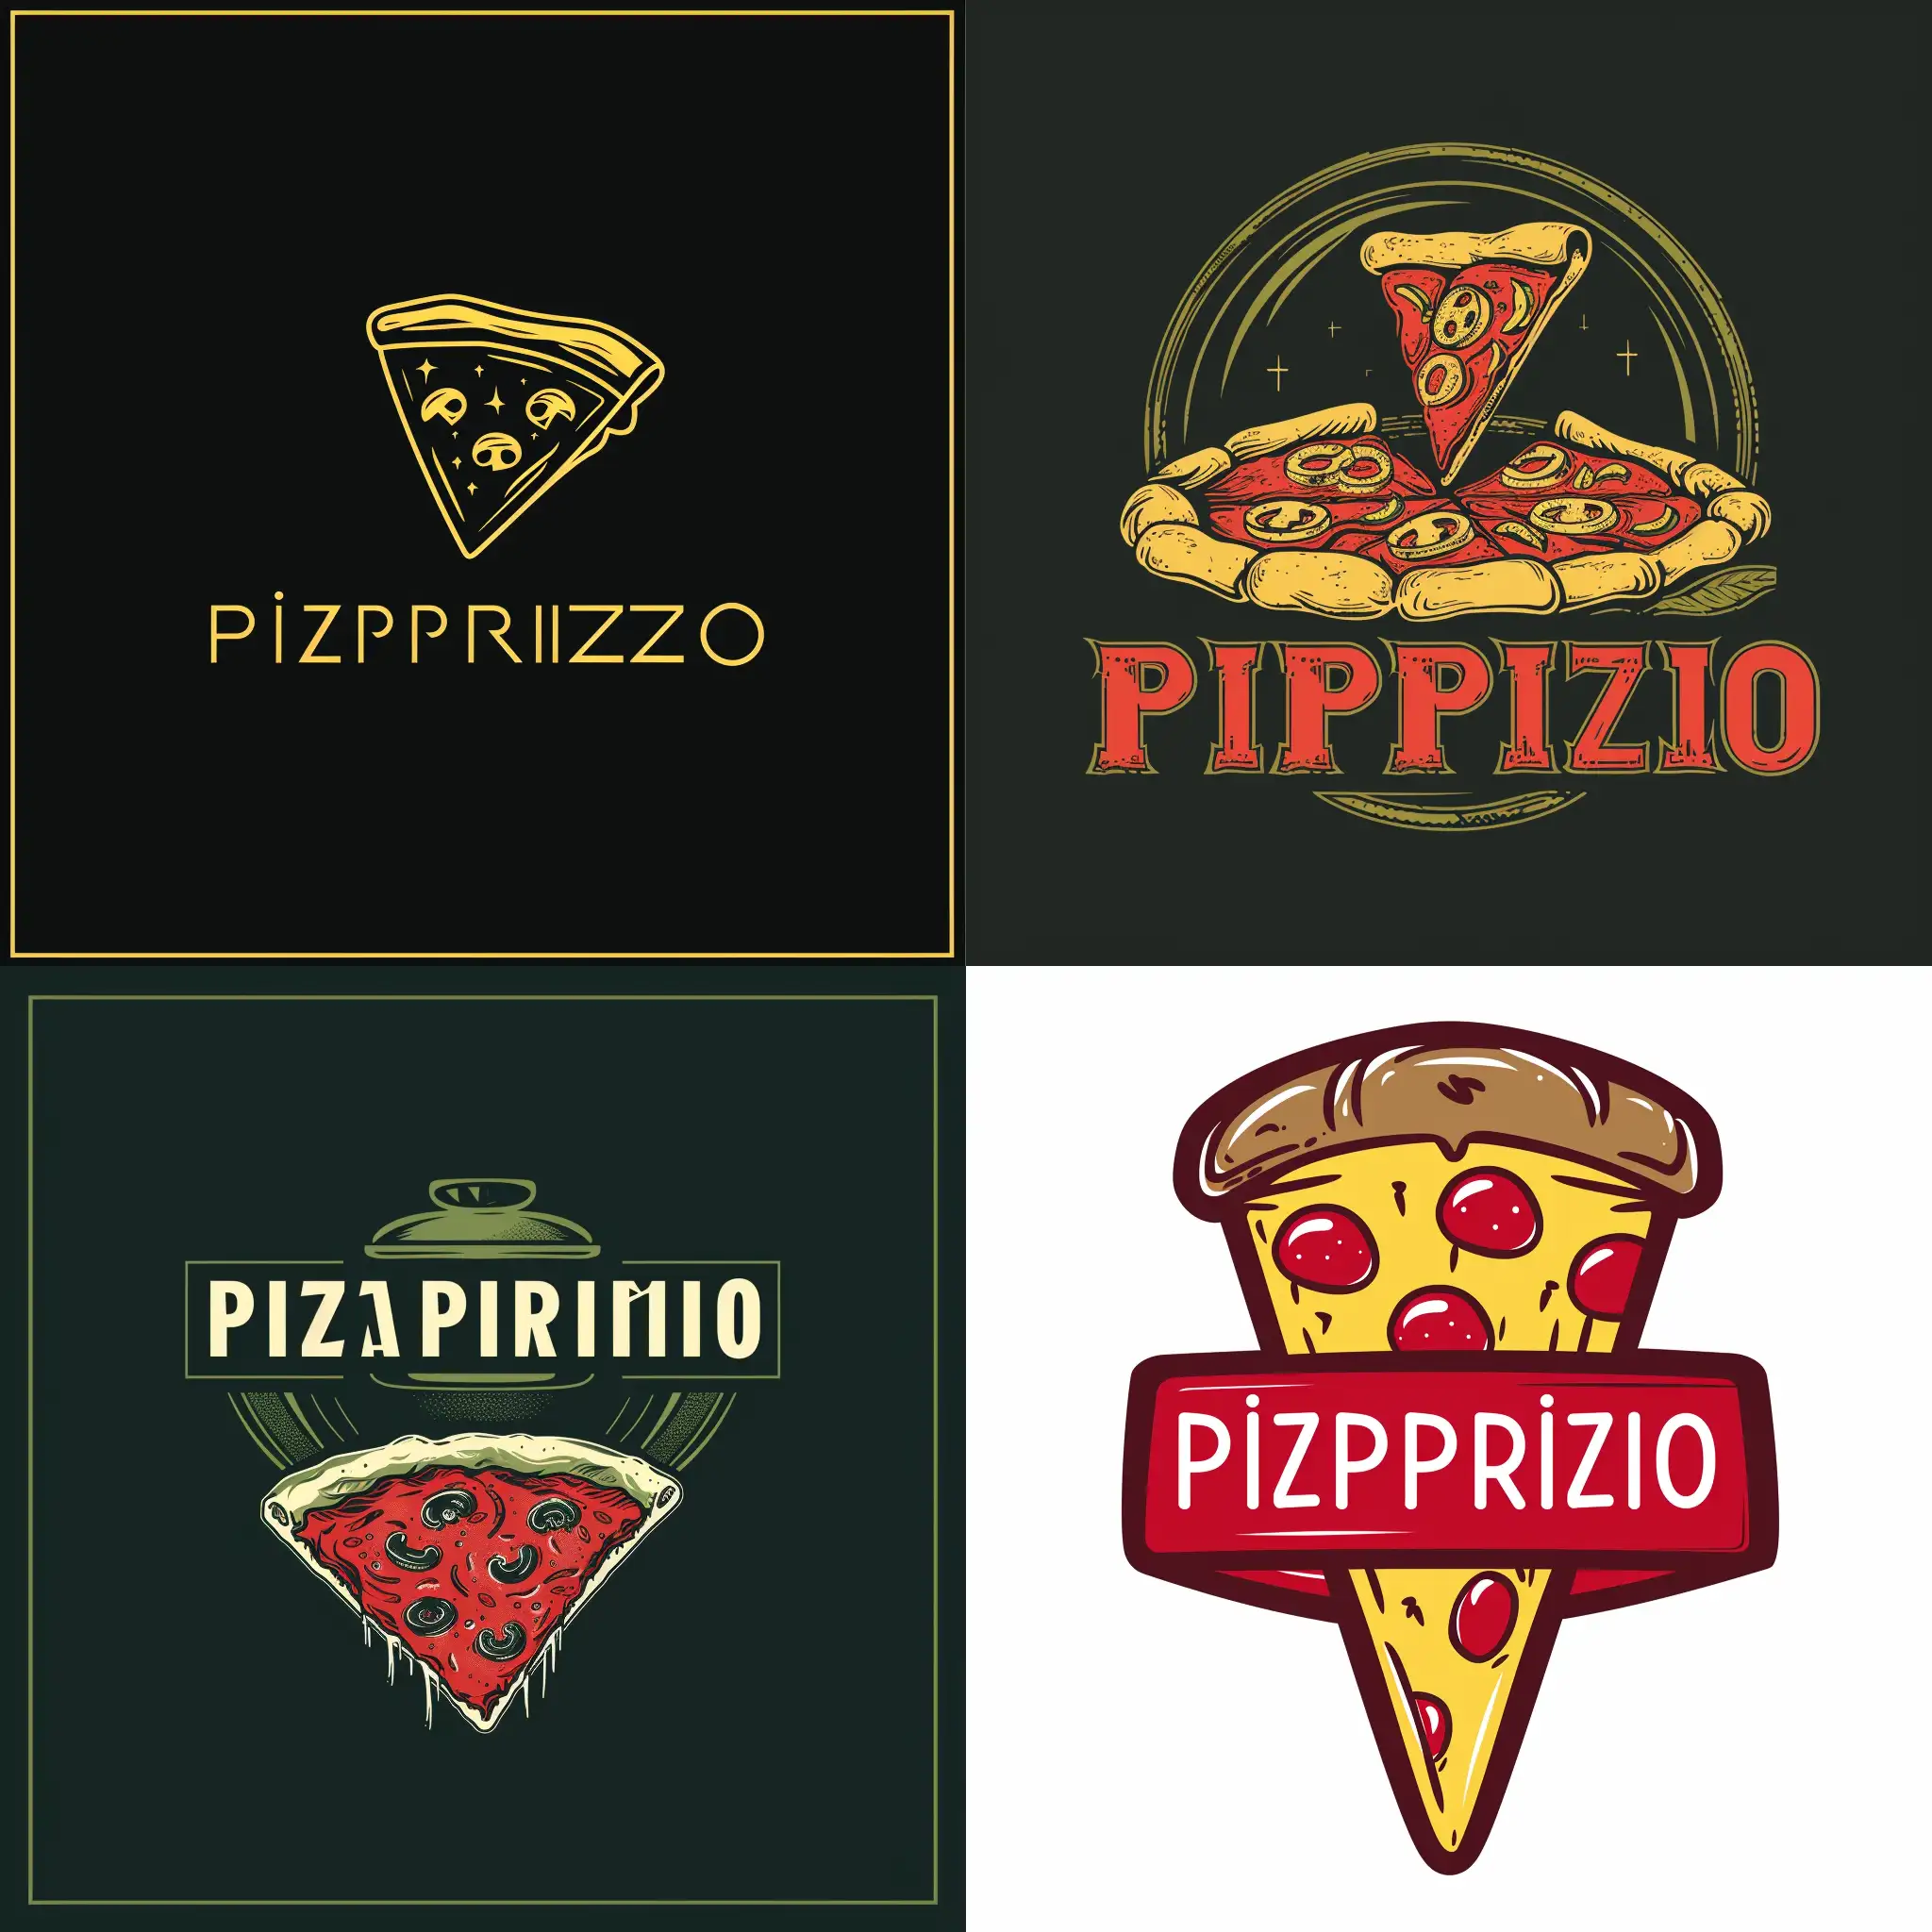 logo for "pizza privio" restaurant